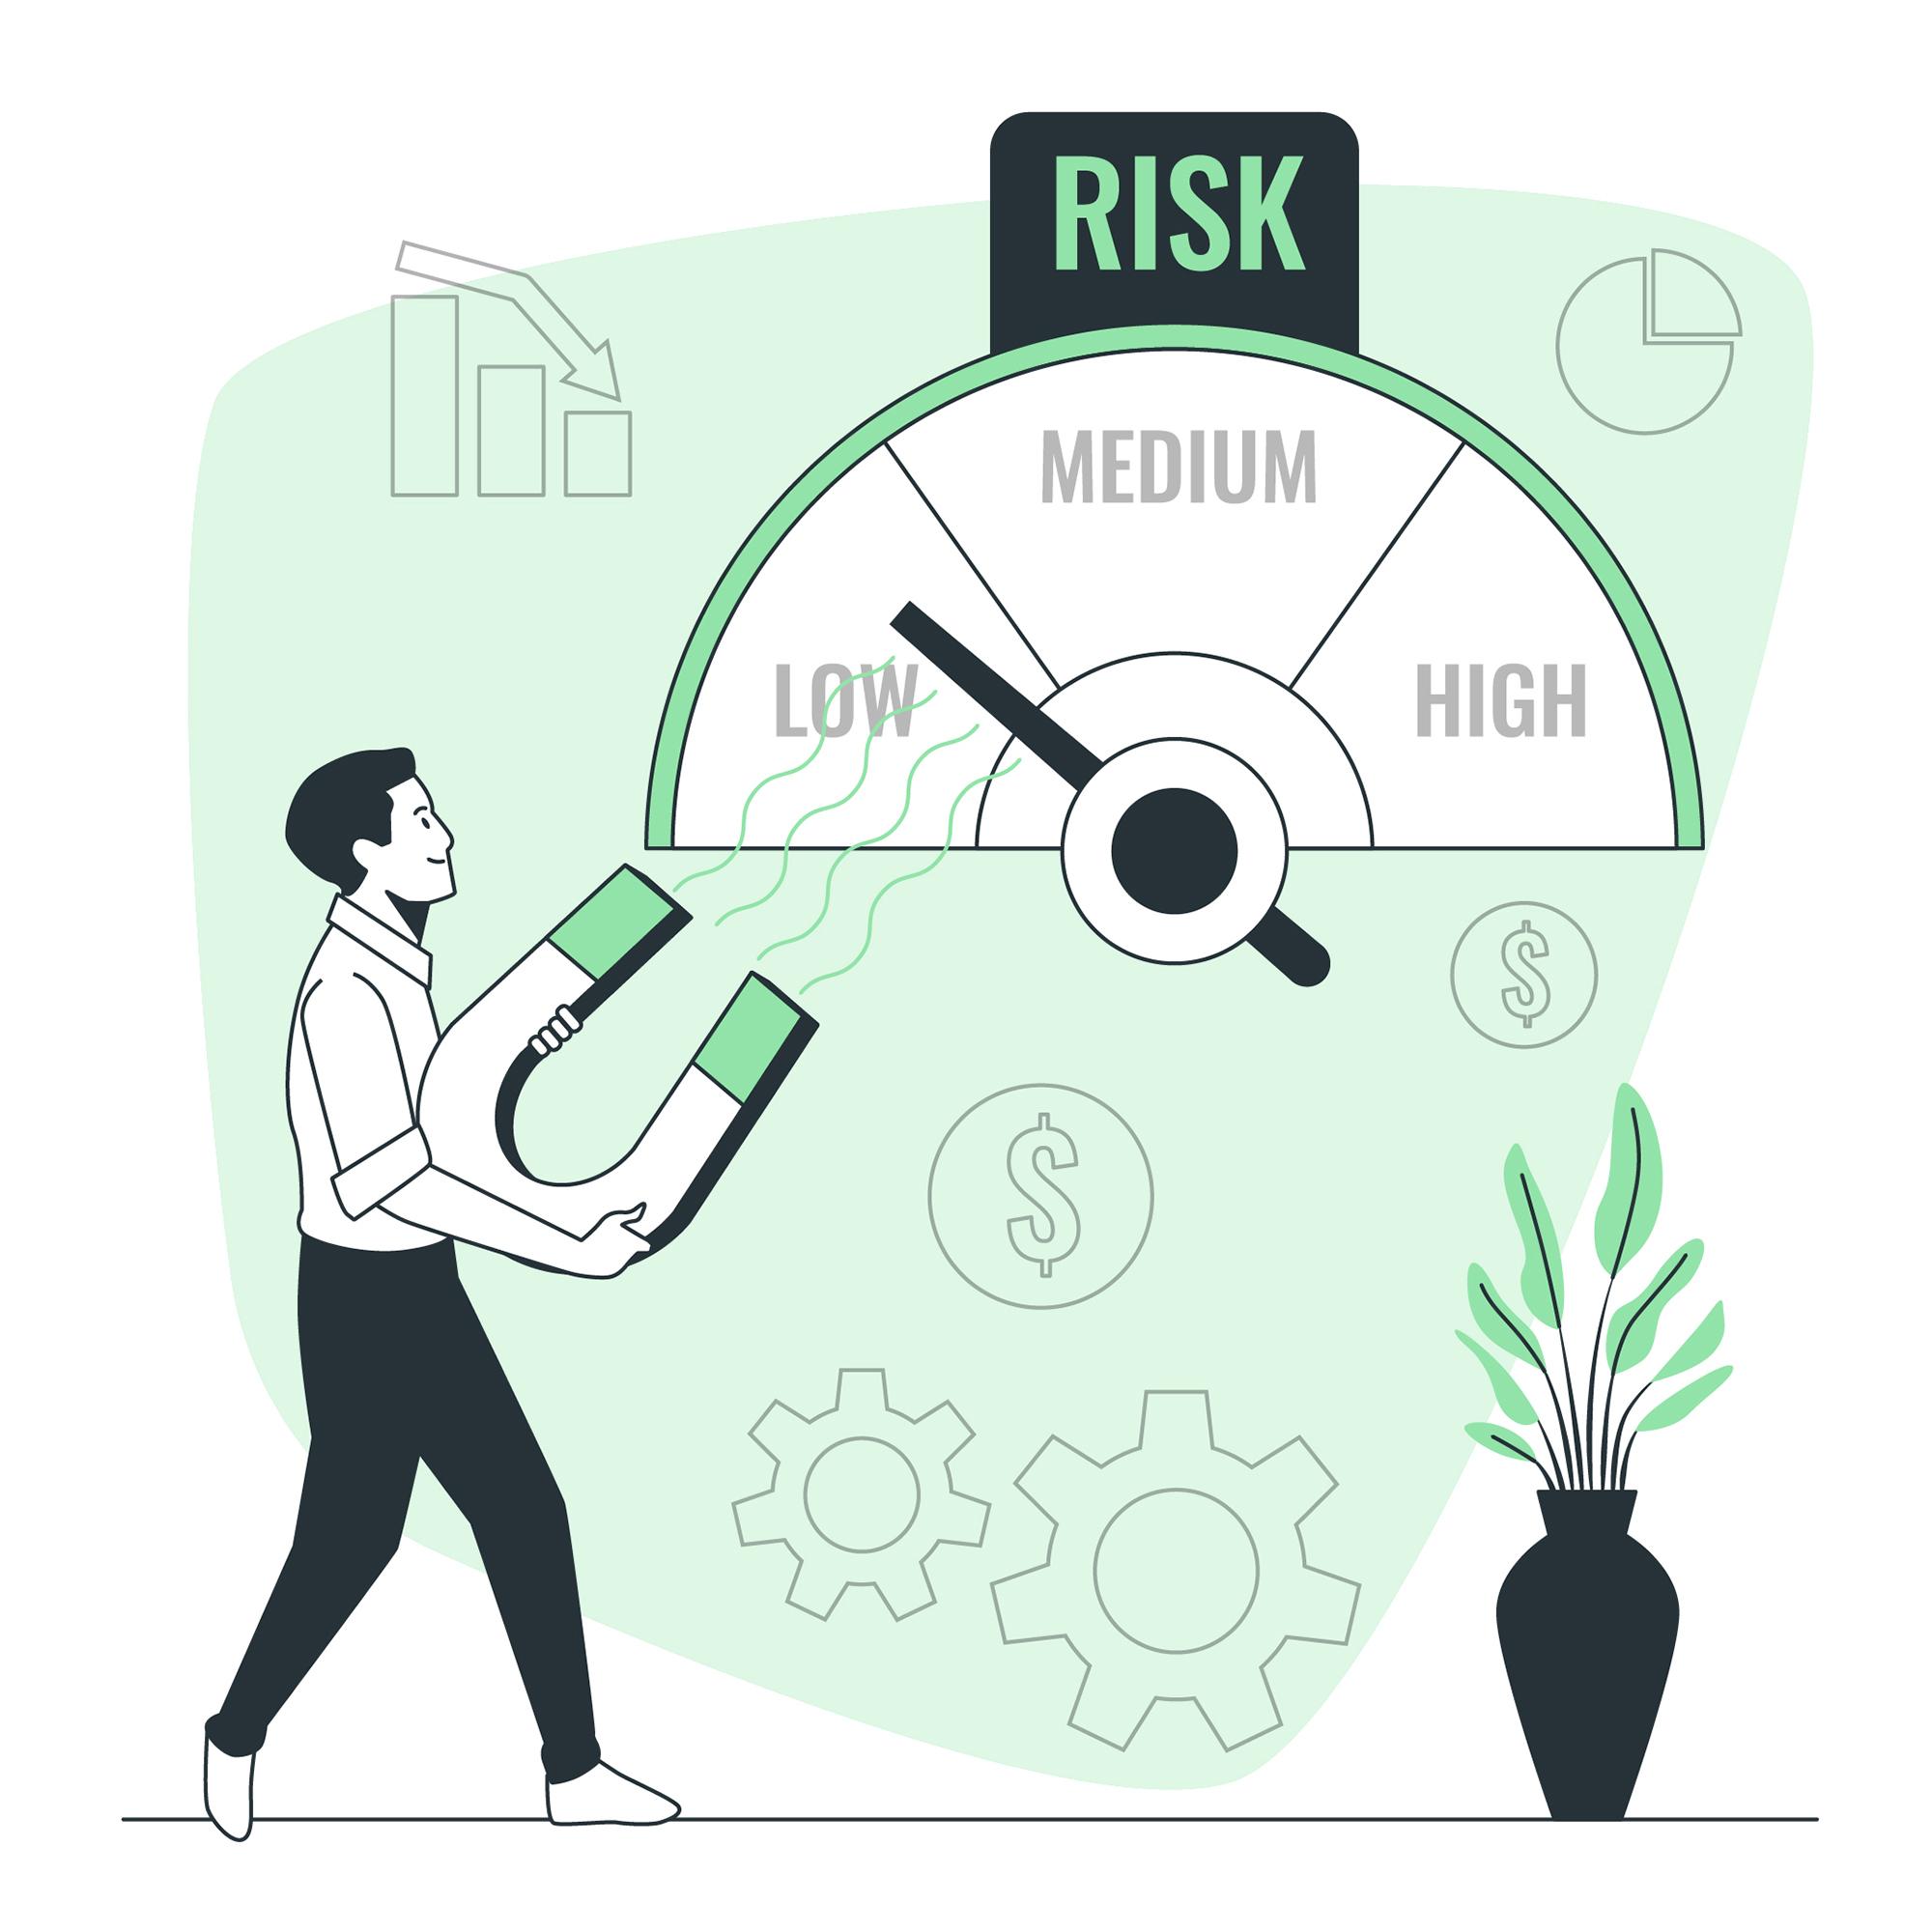 Free vector risk management concept illustration - risk mitigation in anti-money laundering.